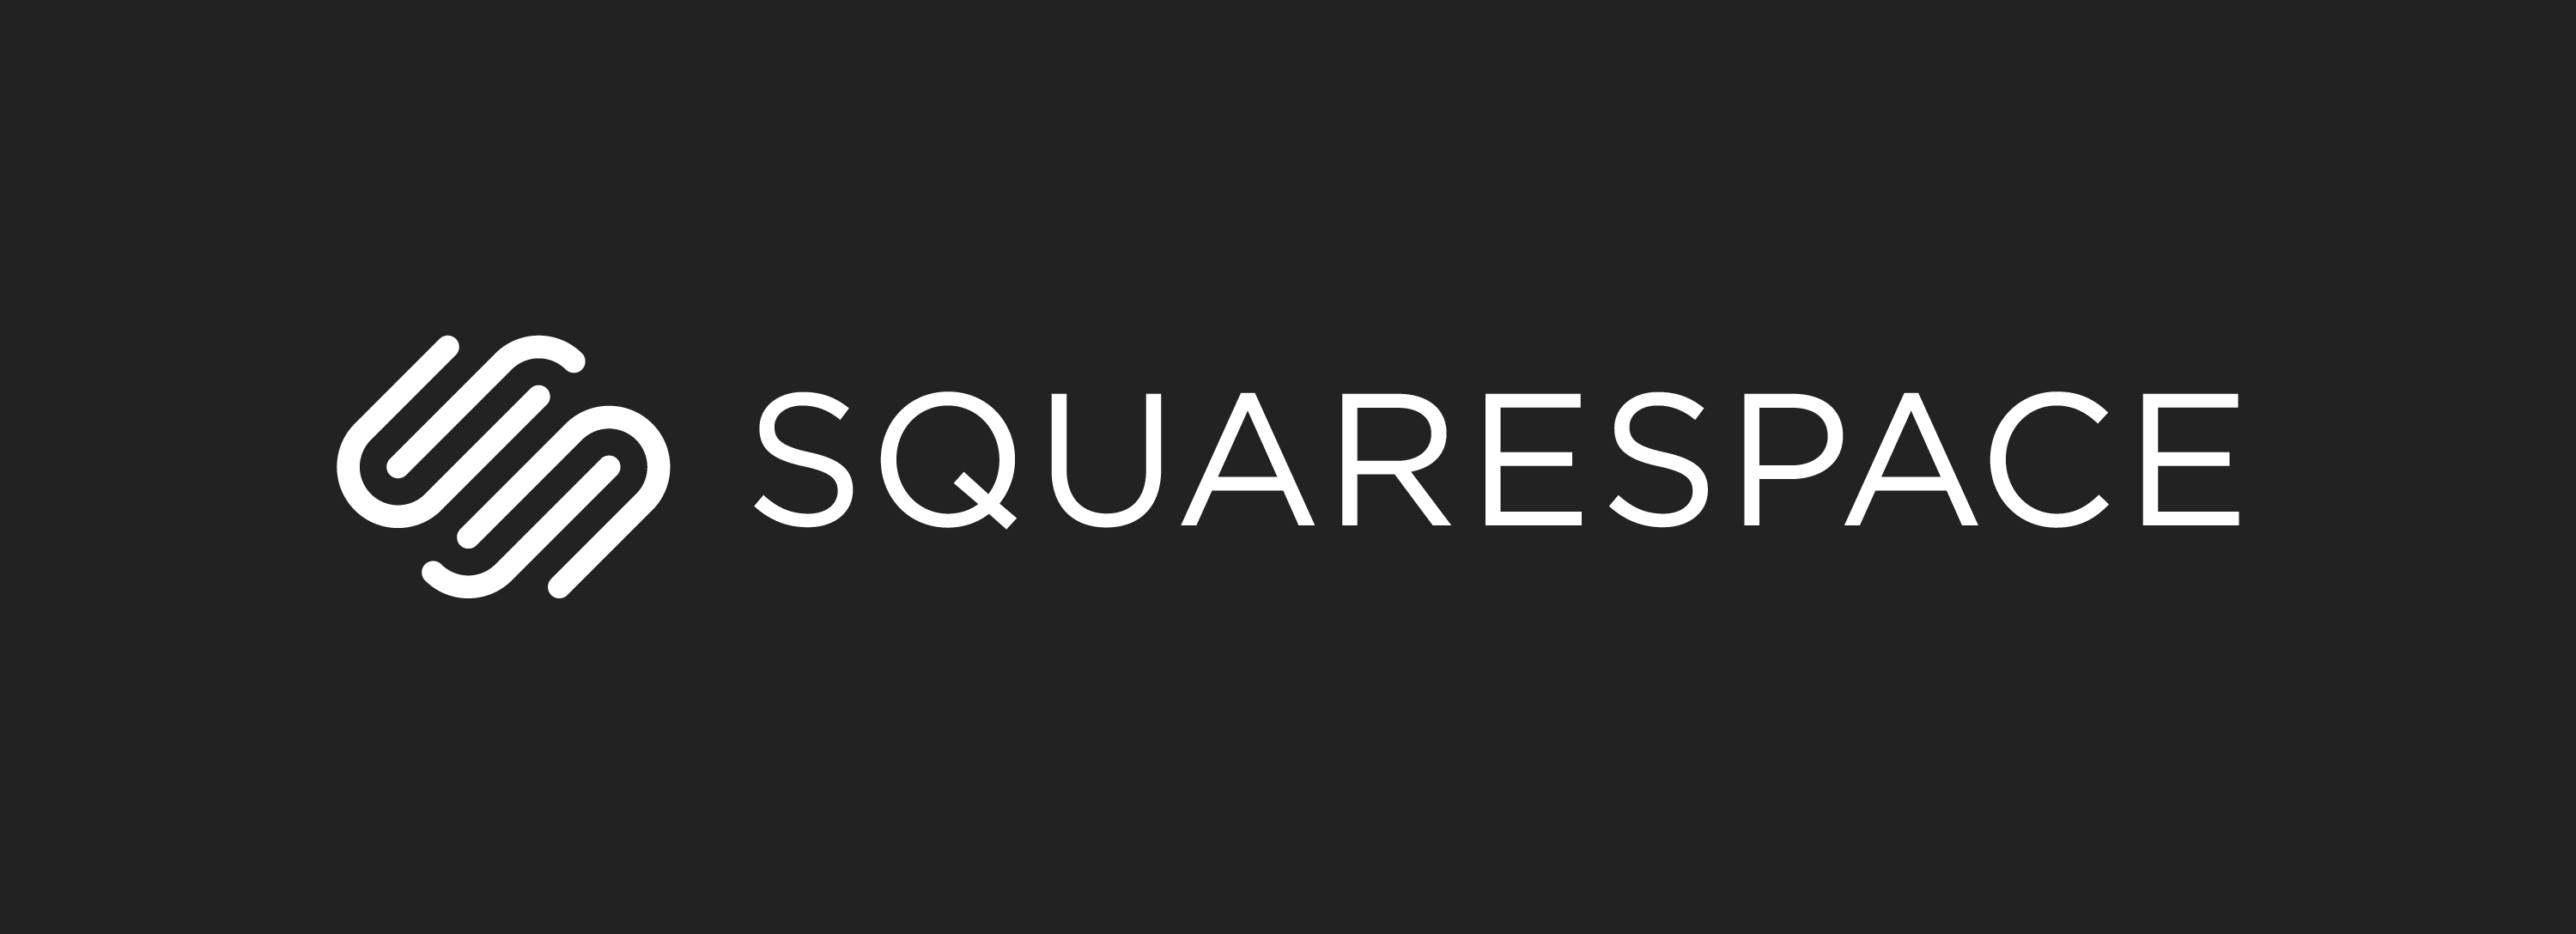 squarespace-logo-horizontal-white.jpg